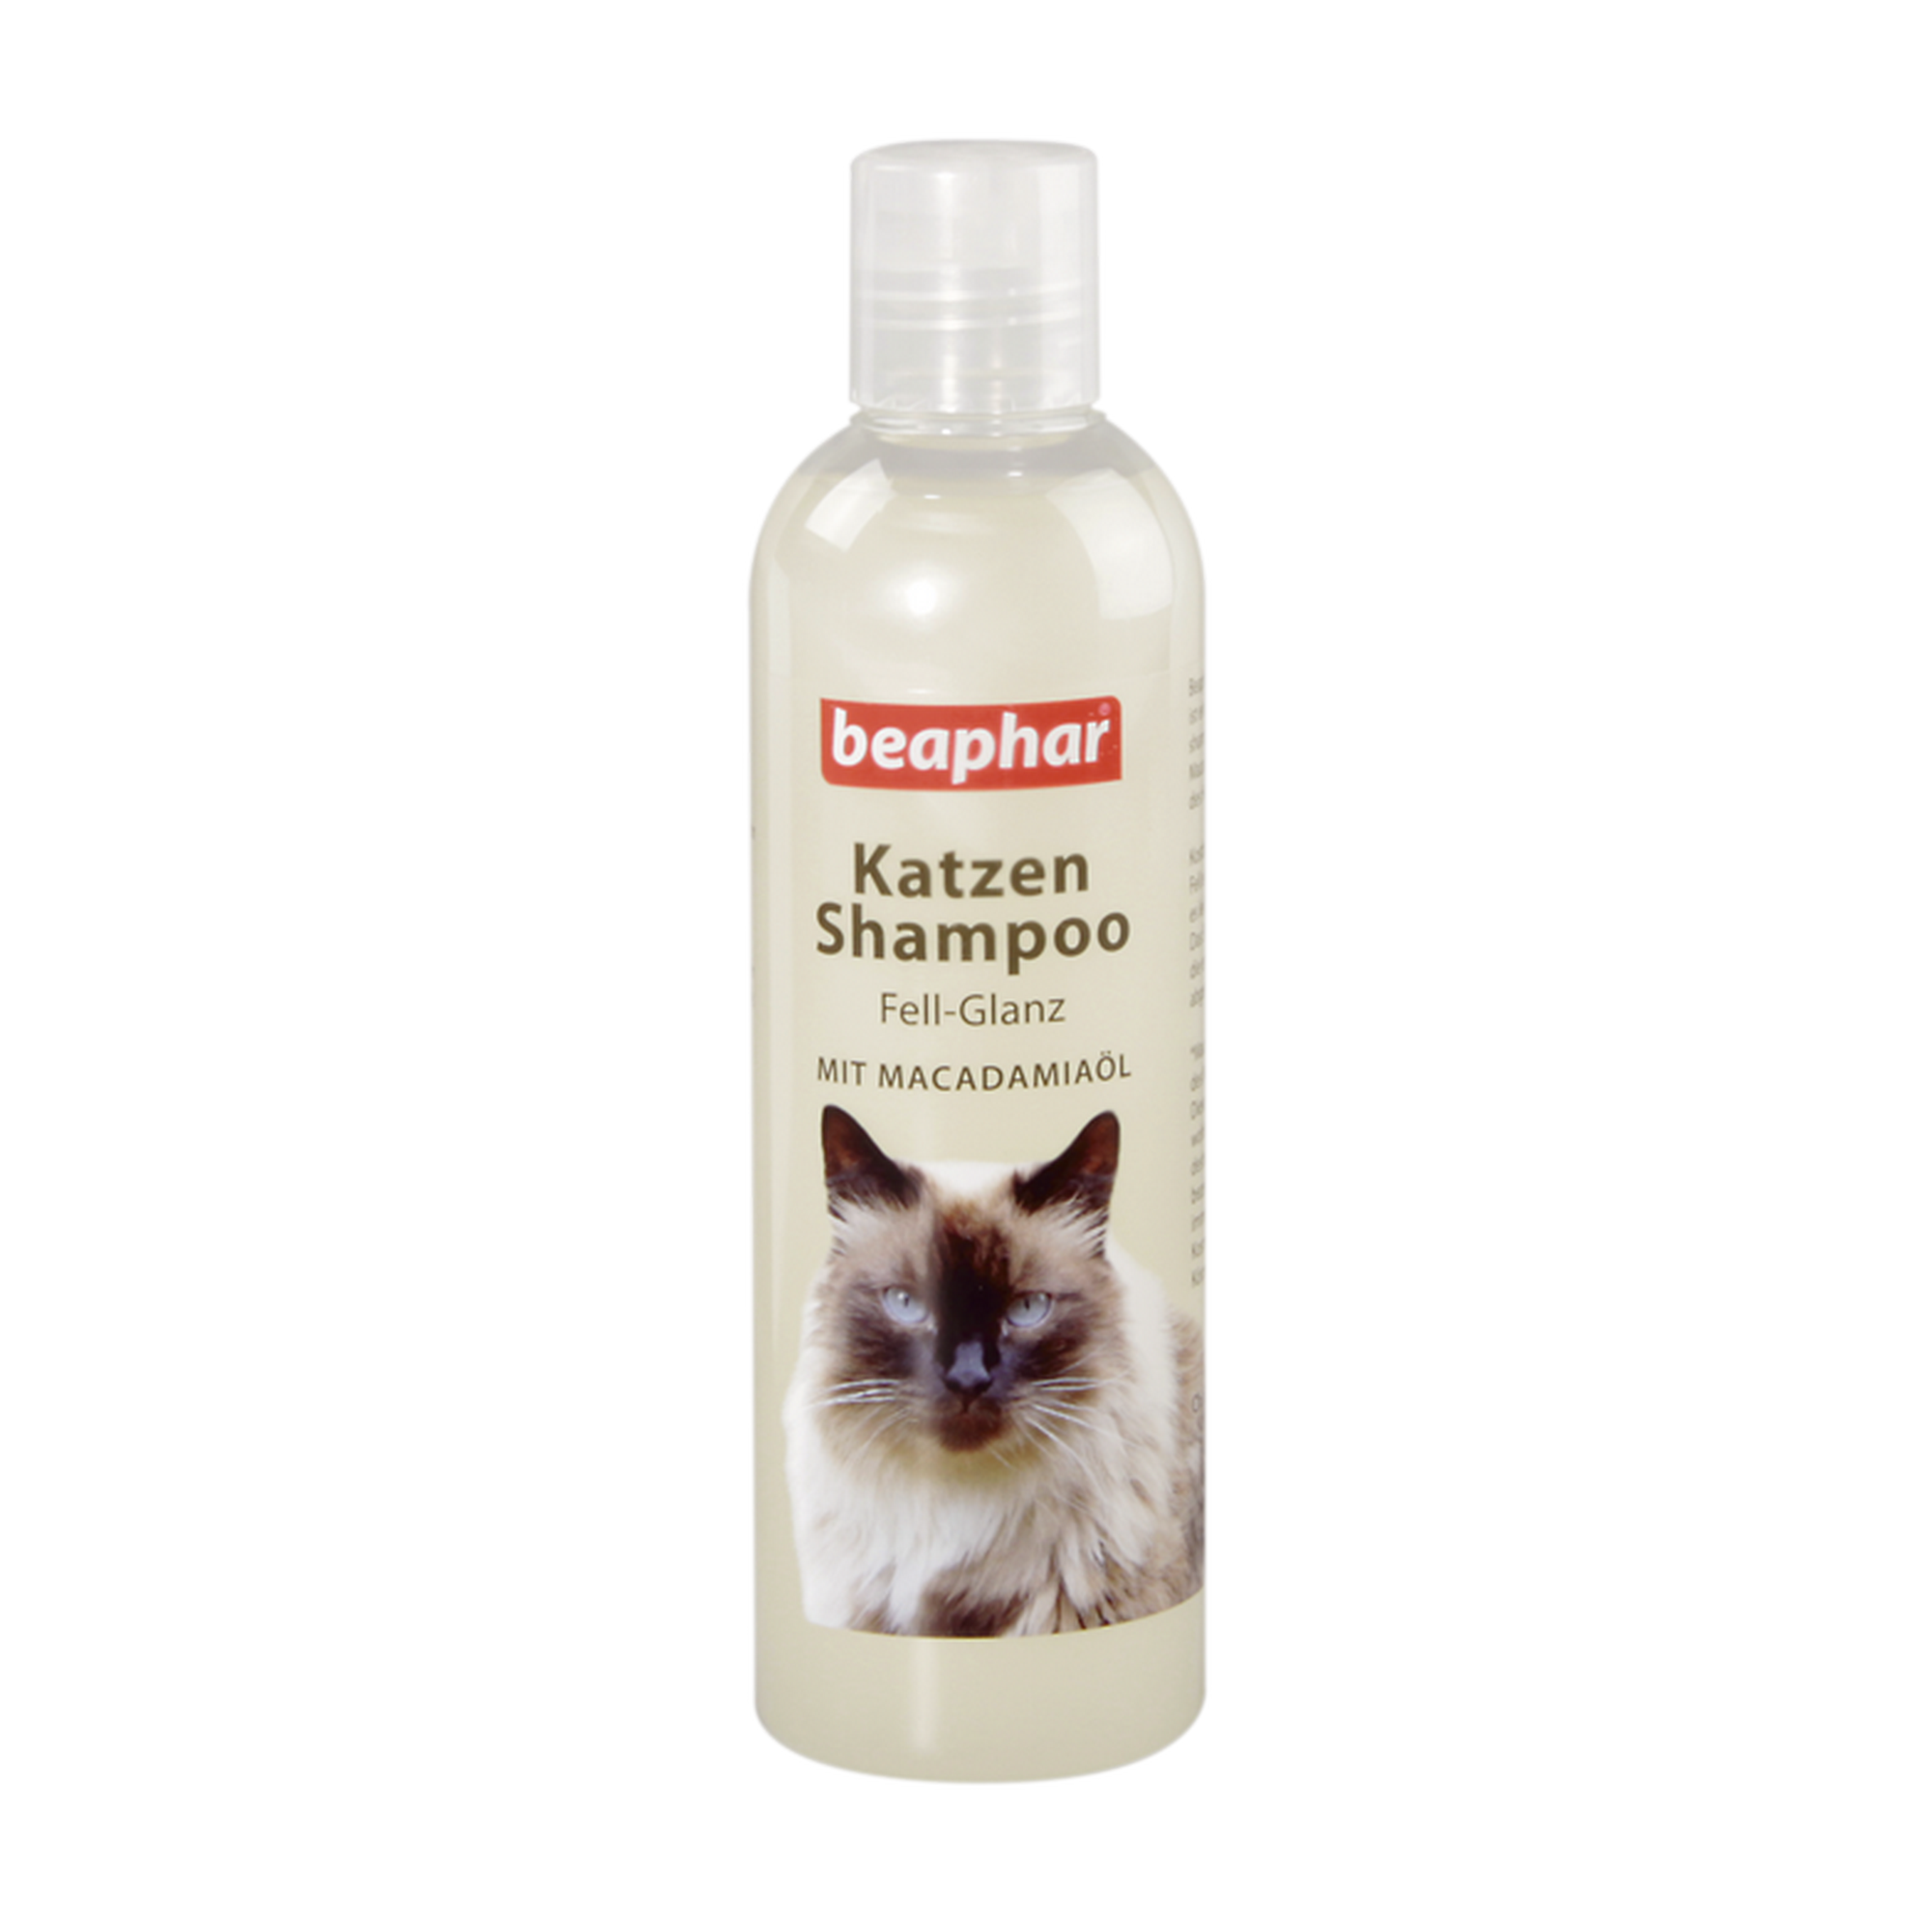 Katzen-Shampoo Fell-Glanz 250 ml + product picture